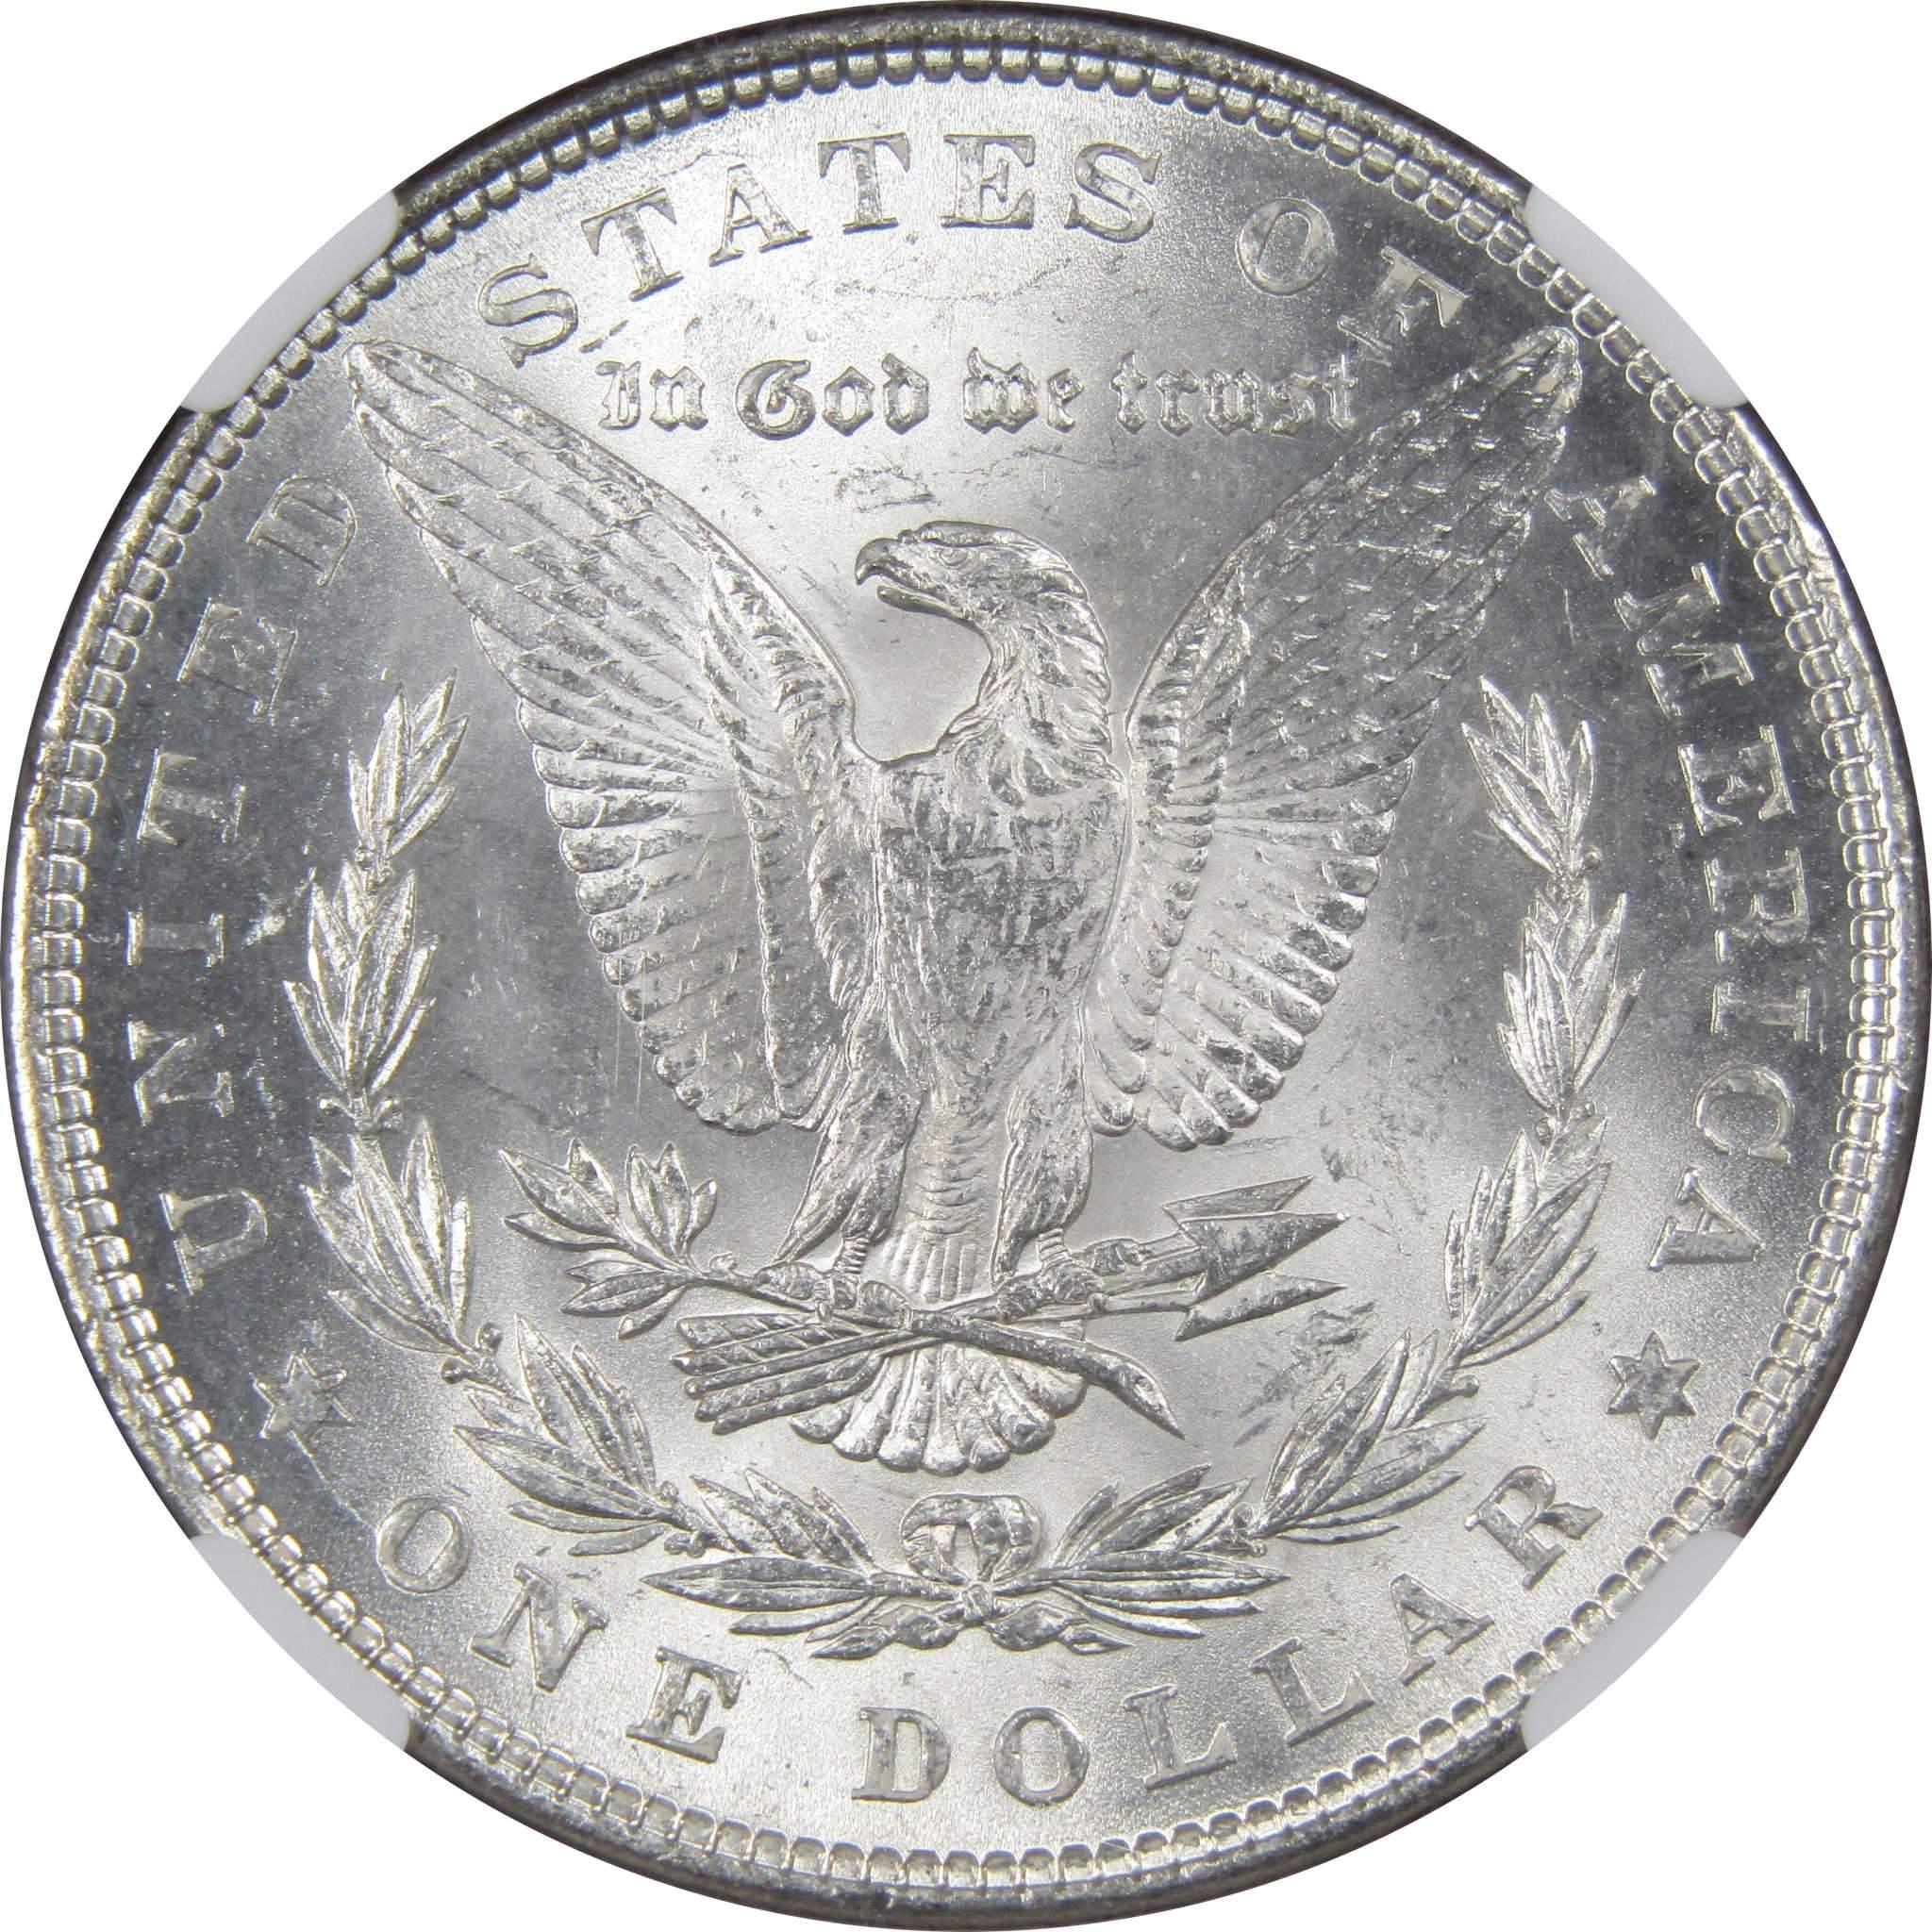 1878 7TF Rev 79 Morgan Dollar MS 62 NGC Silver SKU:IPC5111 - Morgan coin - Morgan silver dollar - Morgan silver dollar for sale - Profile Coins &amp; Collectibles